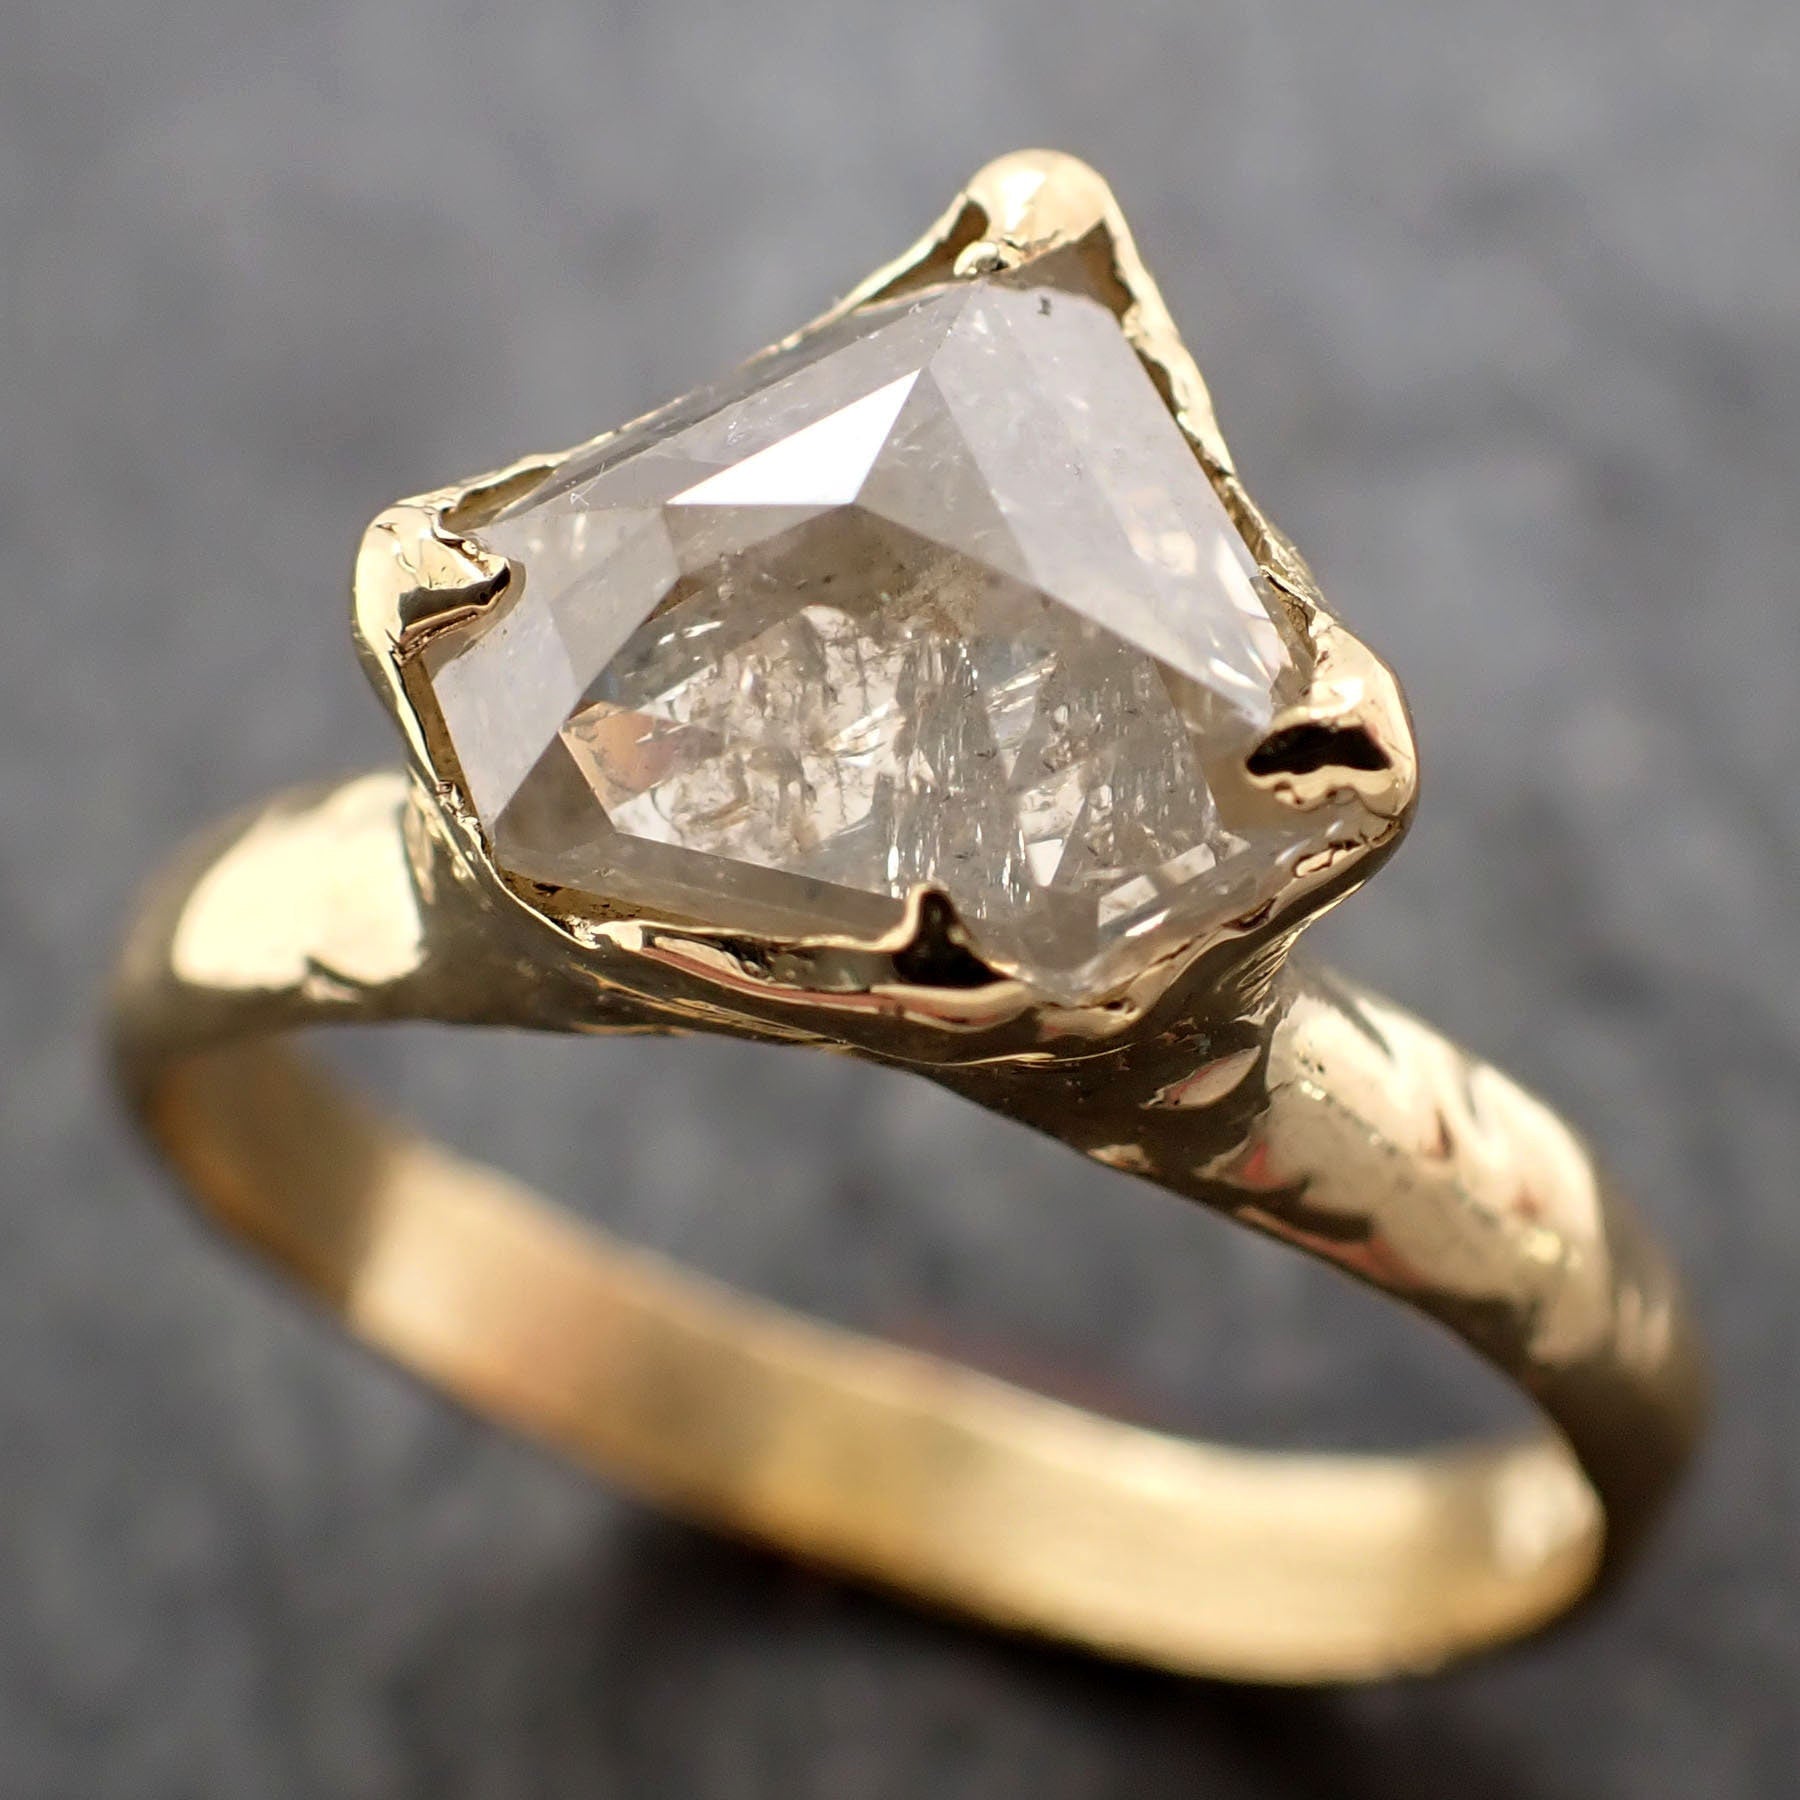 Fancy cut white Diamond Solitaire Engagement 18k yellow Gold Wedding Ring byAngeline 2919